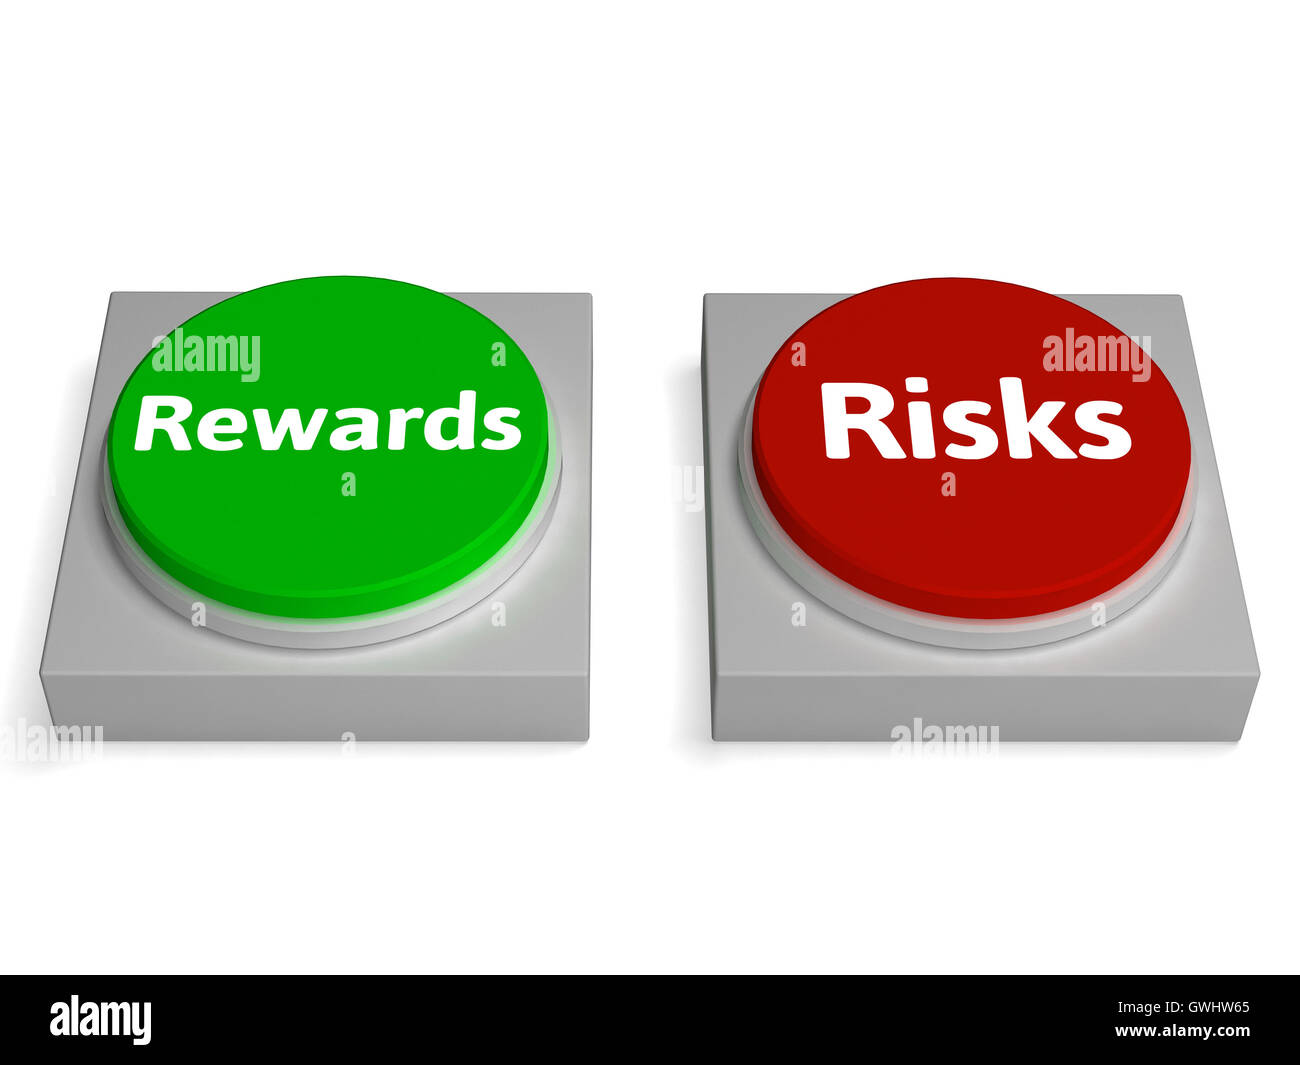 Risk Reward Buttons Shows Risks Or Rewards Stock Photo